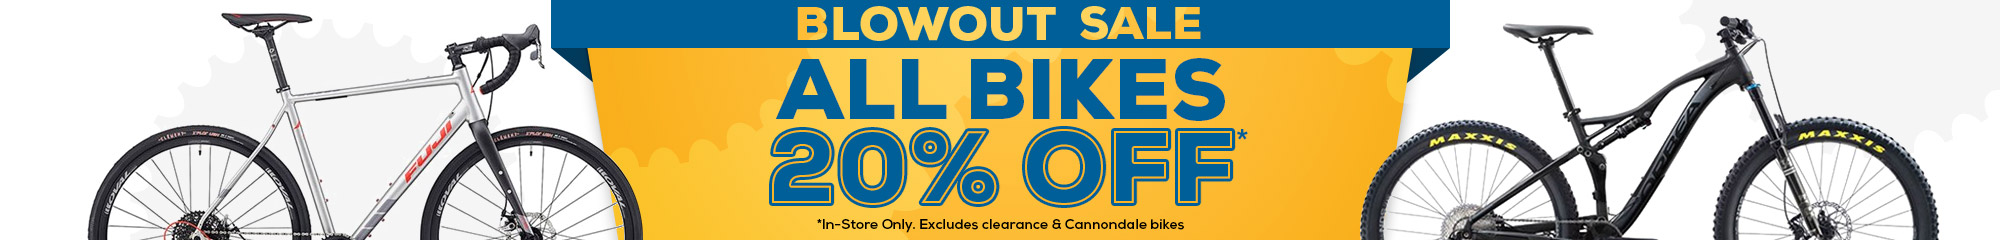 Bike Blowout Sale.